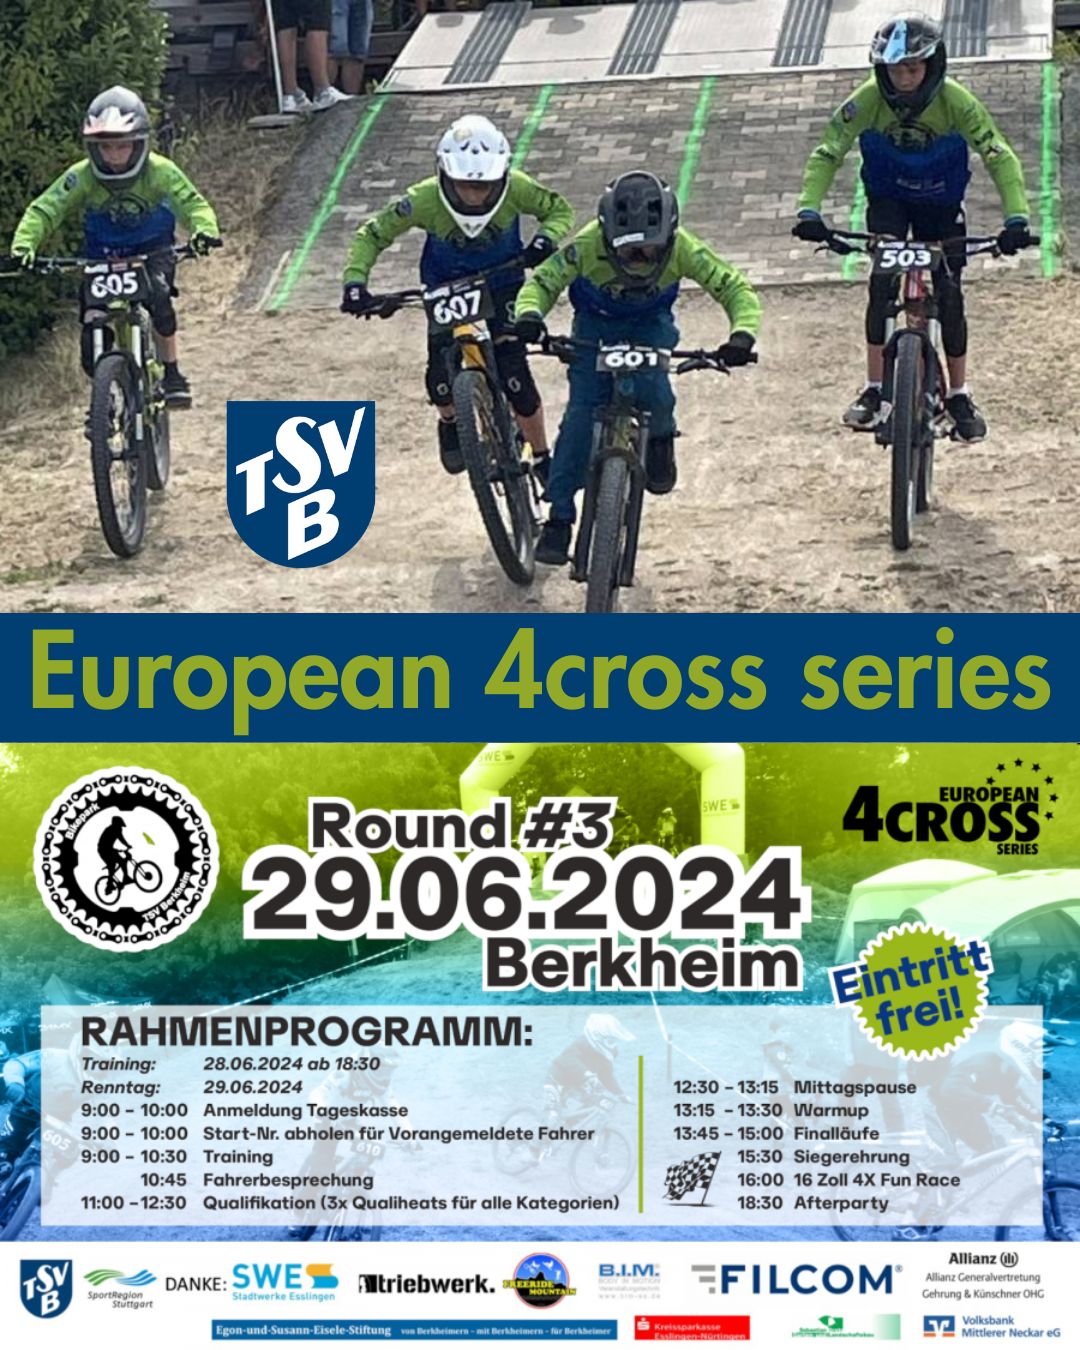 European 4cross series